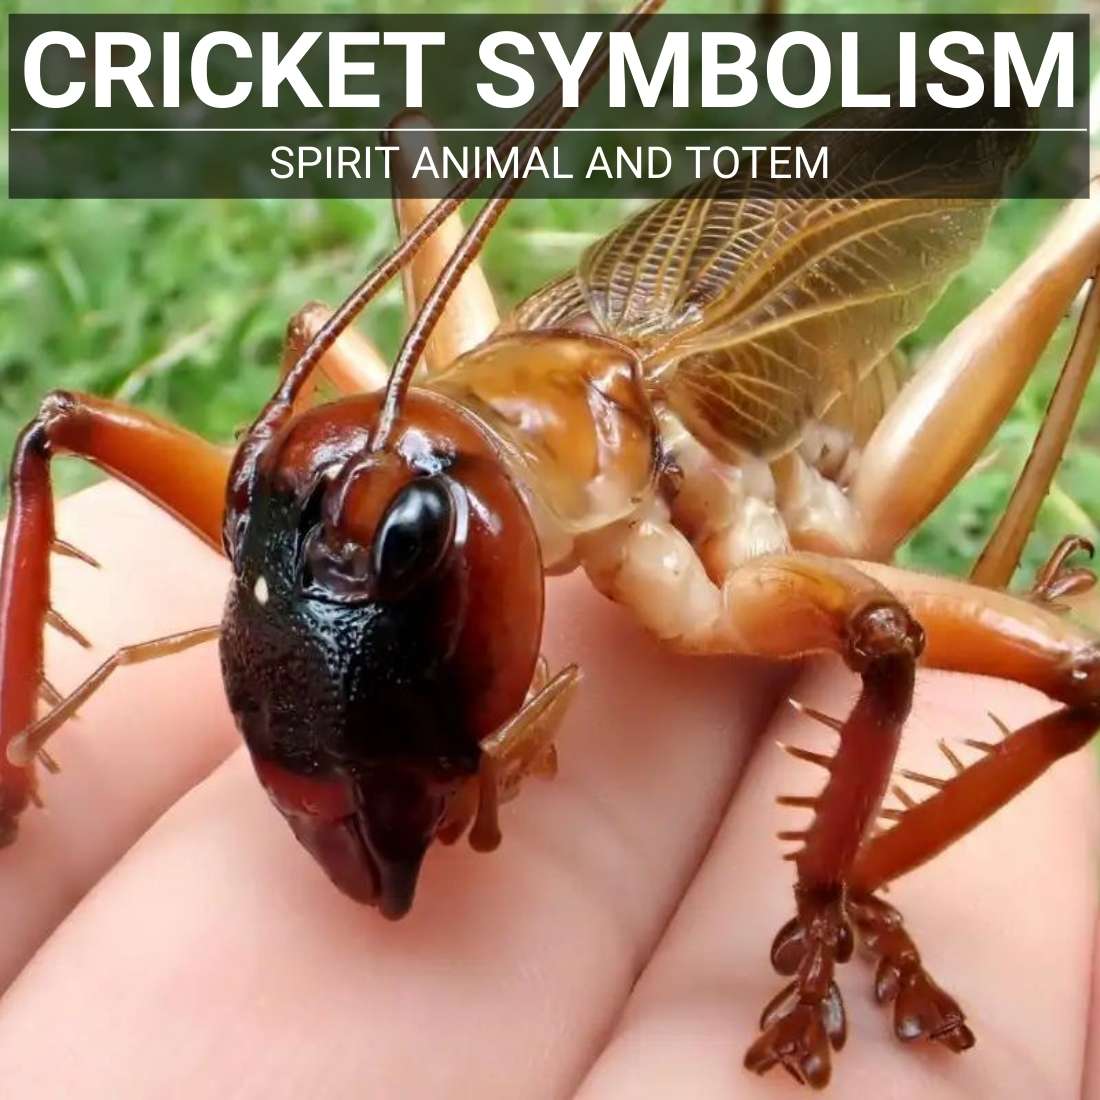 Cricket symbolism